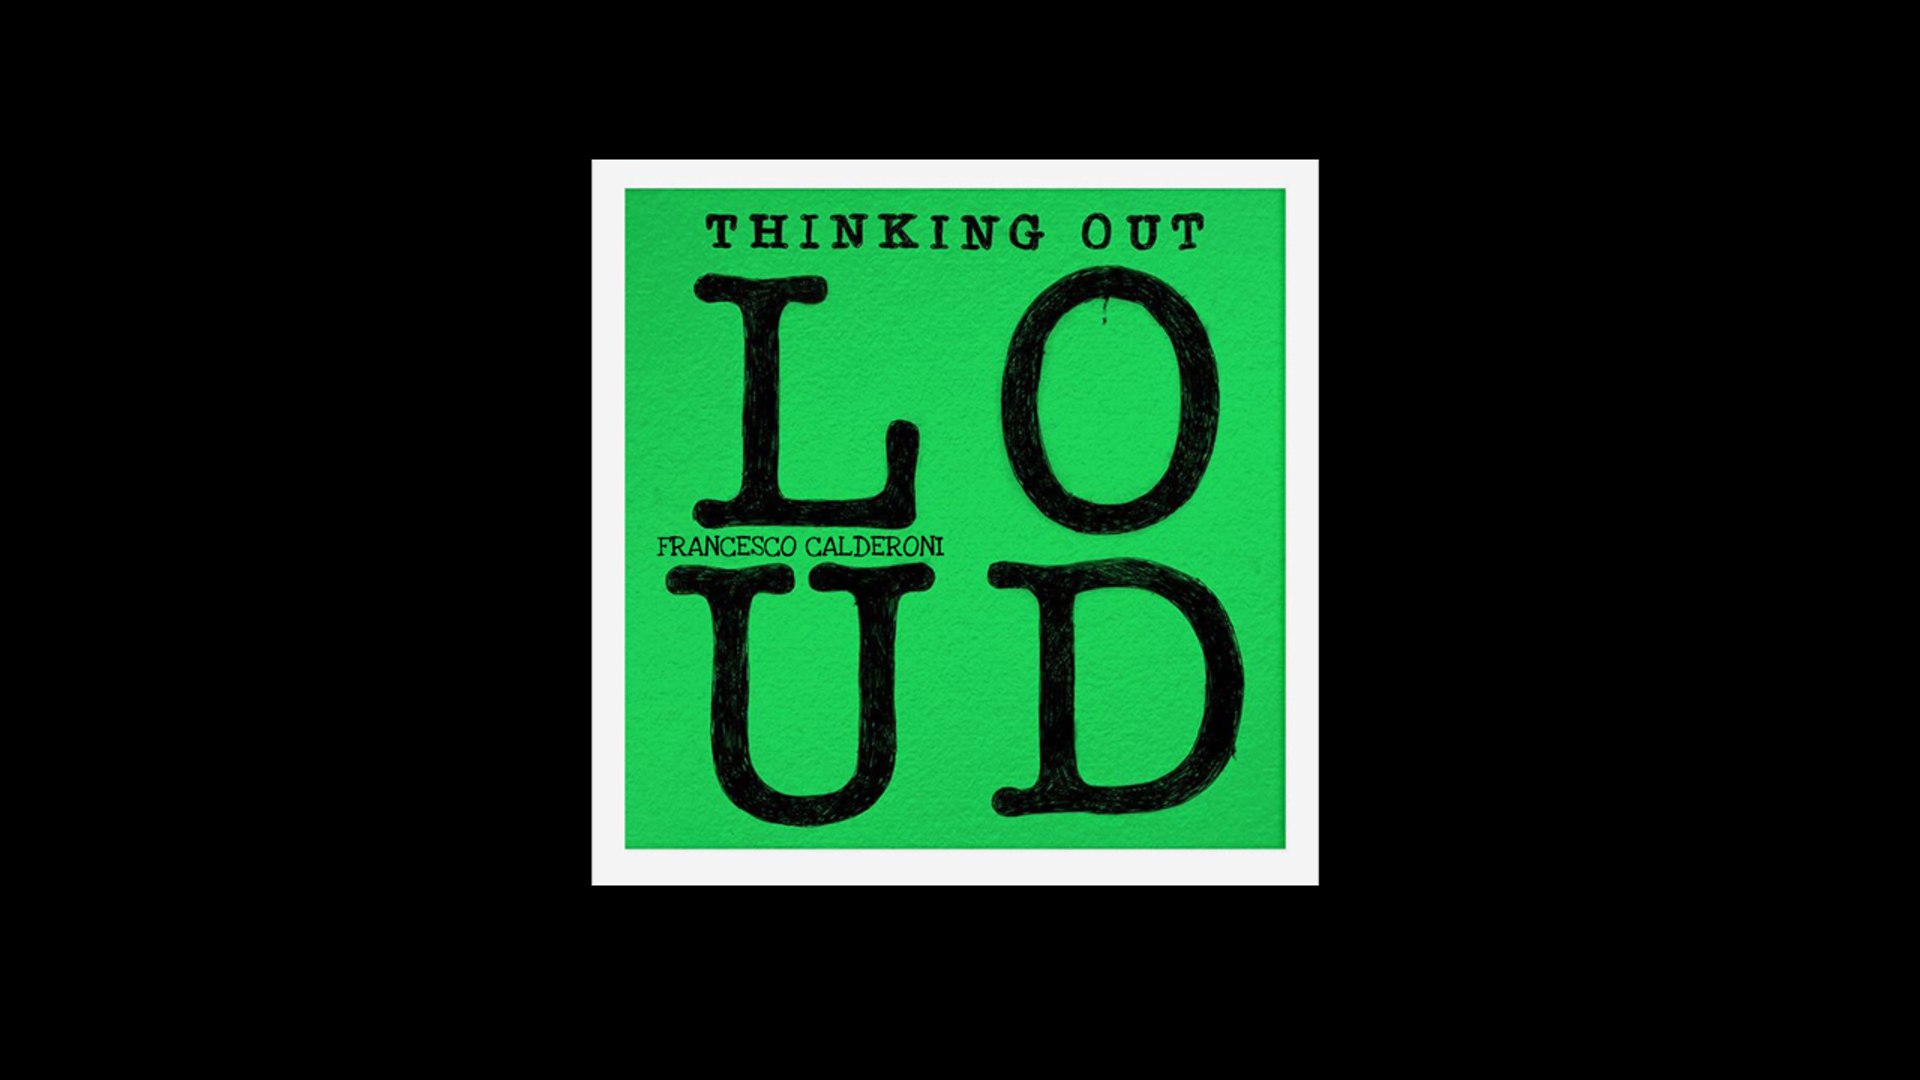 Ed Sheeran - Thinking out loud - Cover by Francesco Calderoni